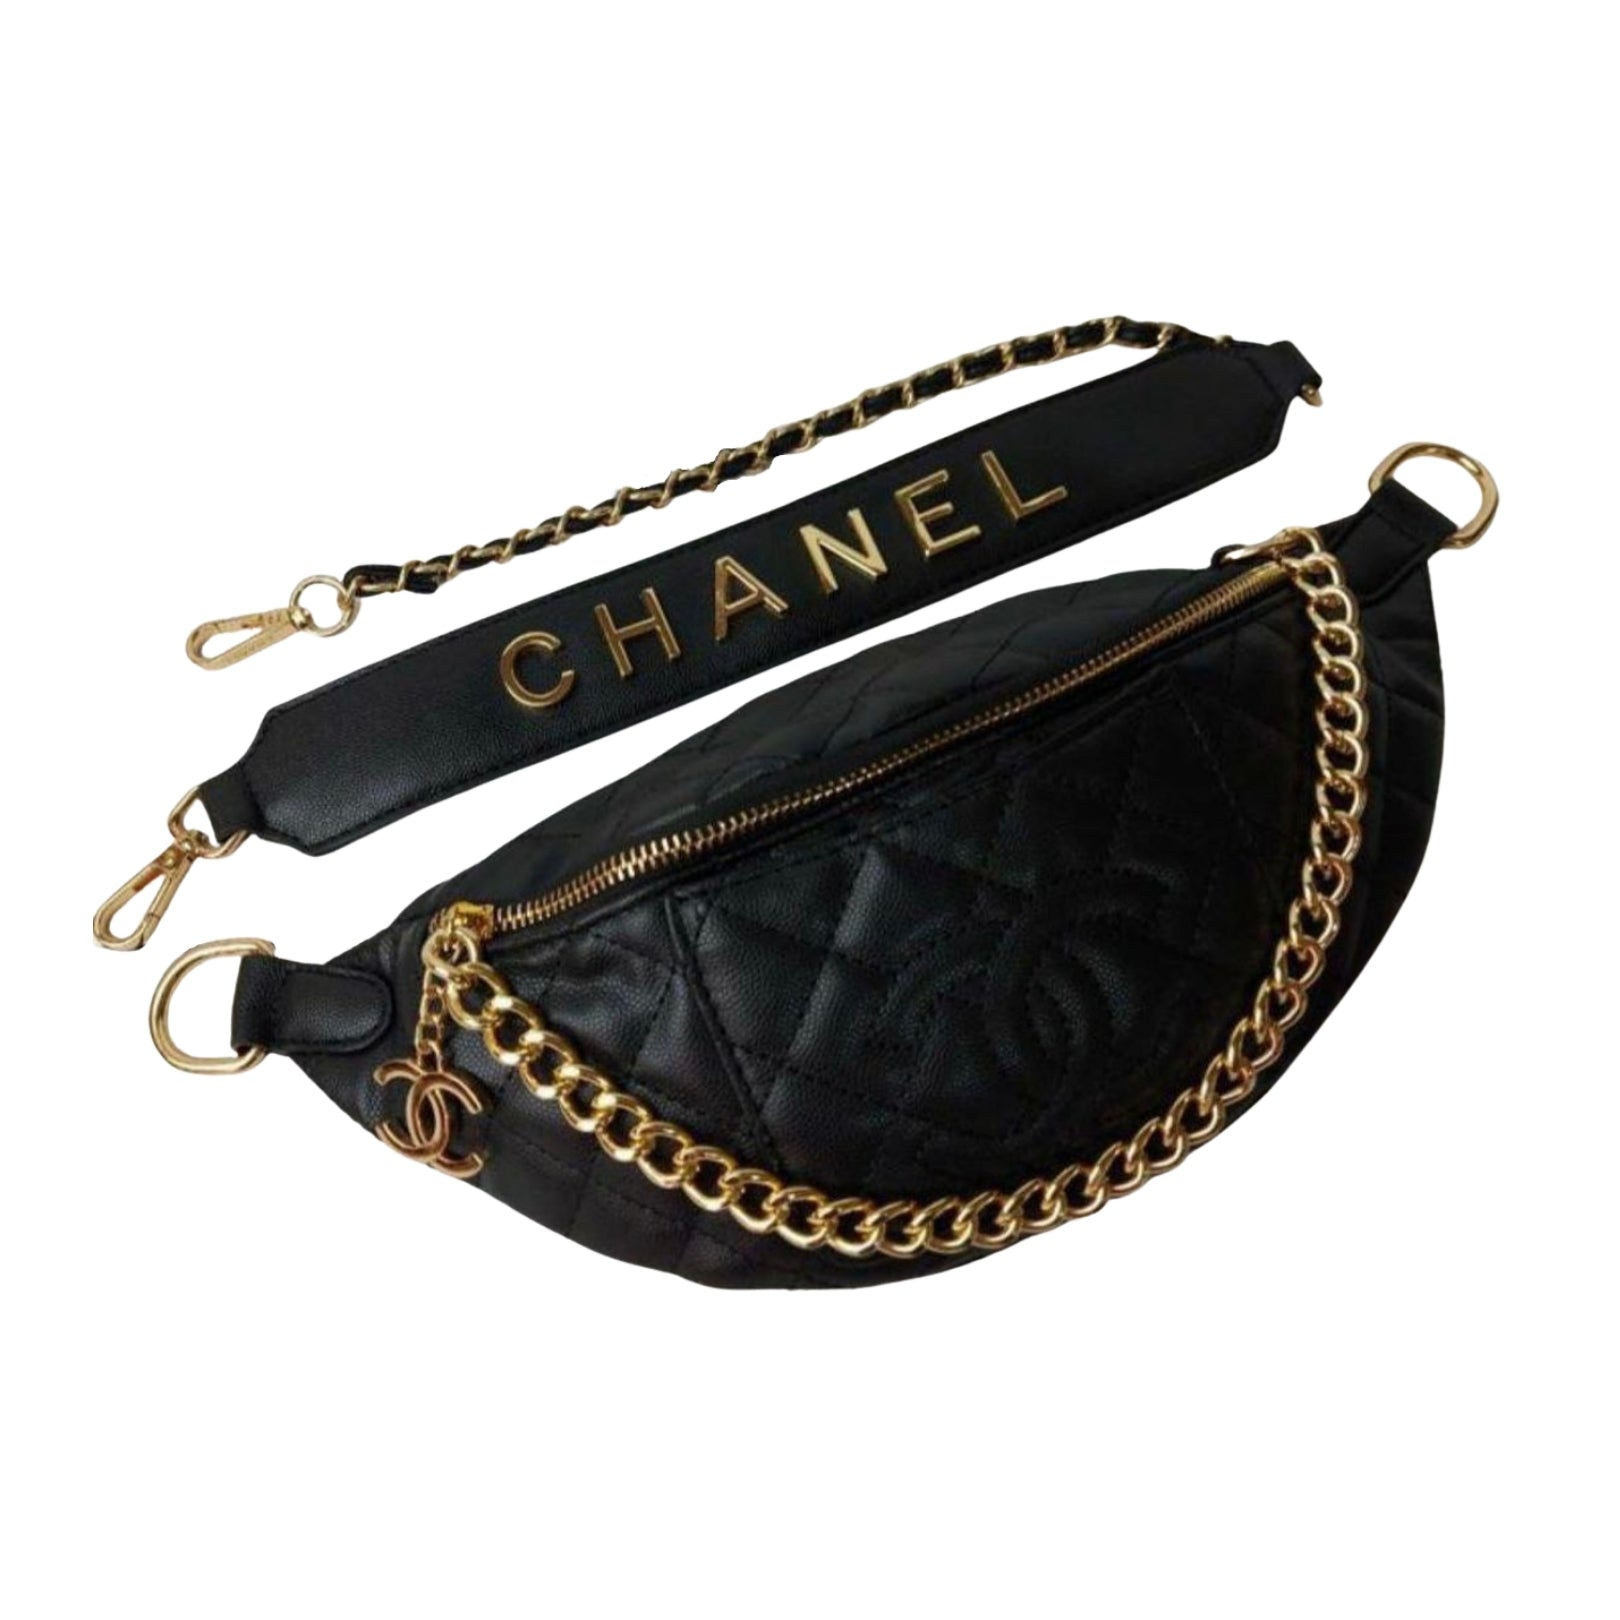 dapet Chanel phone bag FOR FREE?!